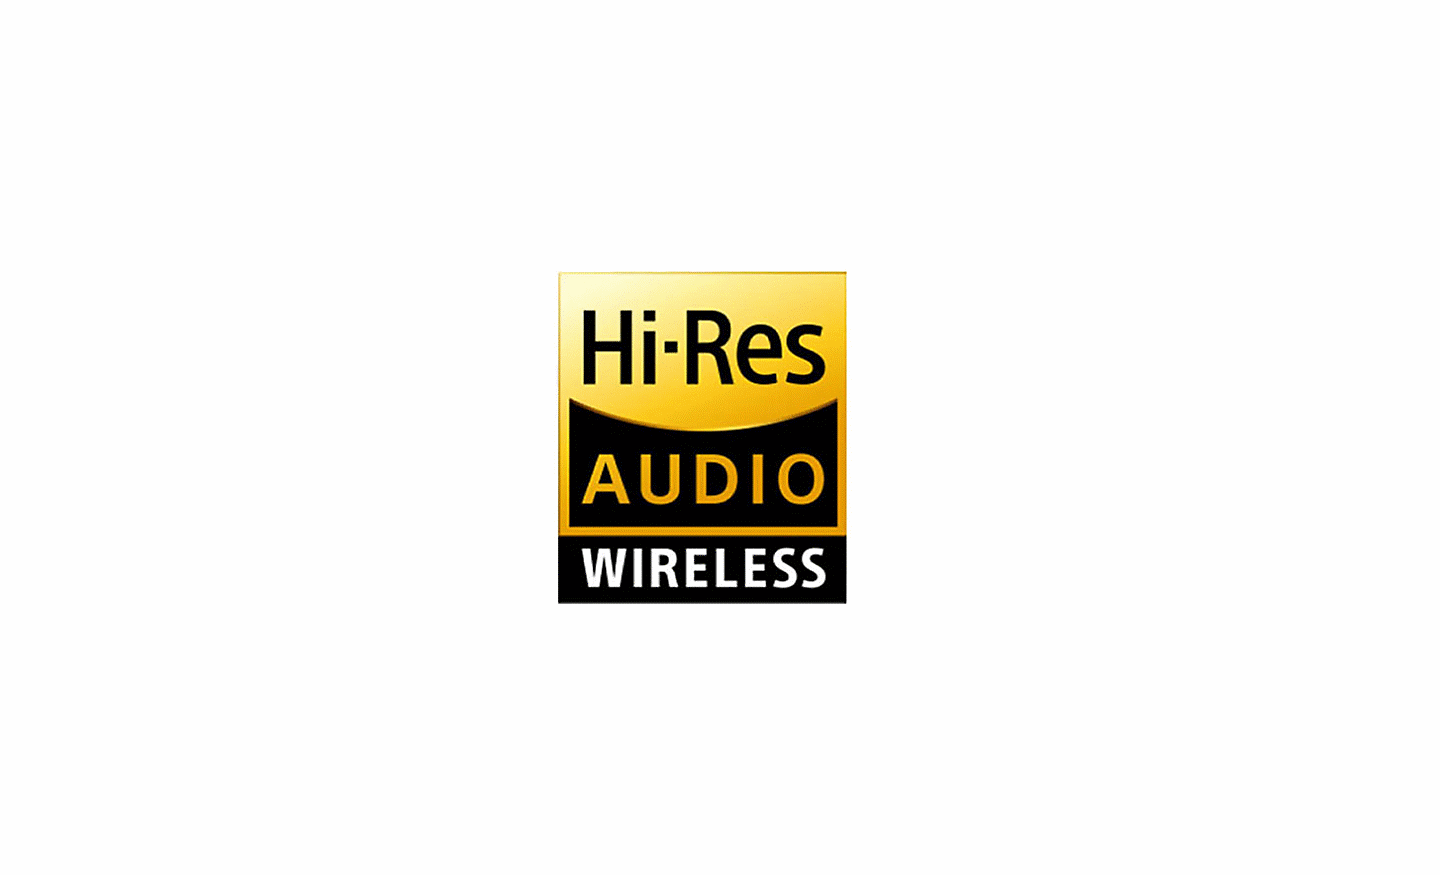 Bild des Hi-Res Audio Wireless-Logos